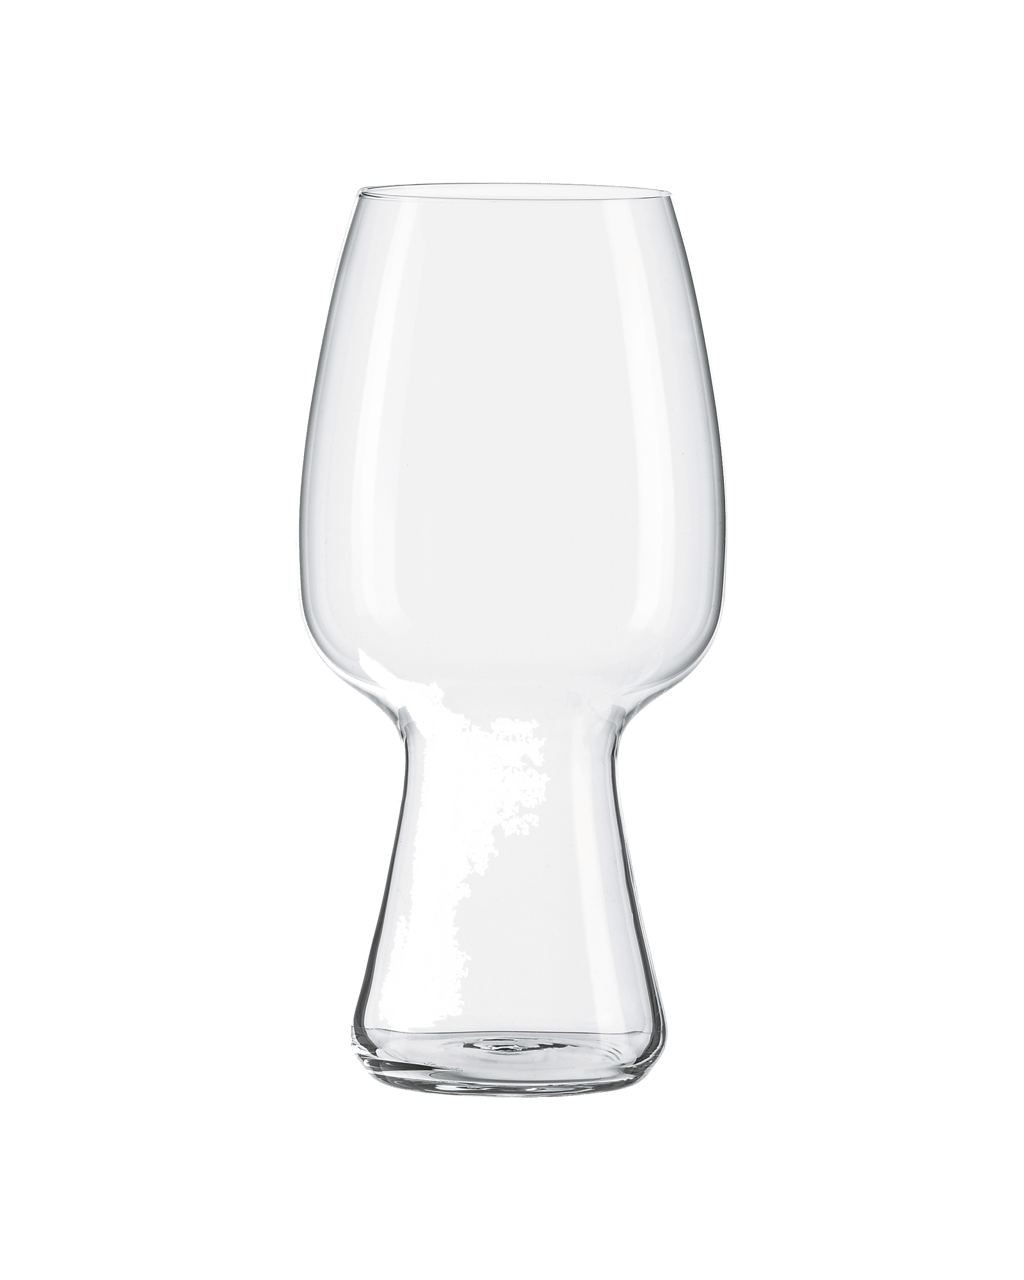 Spiegelau Craft Beer Stout Glass 620ml 4 Pk Unbeatable Prices Buy Online Best Deals With